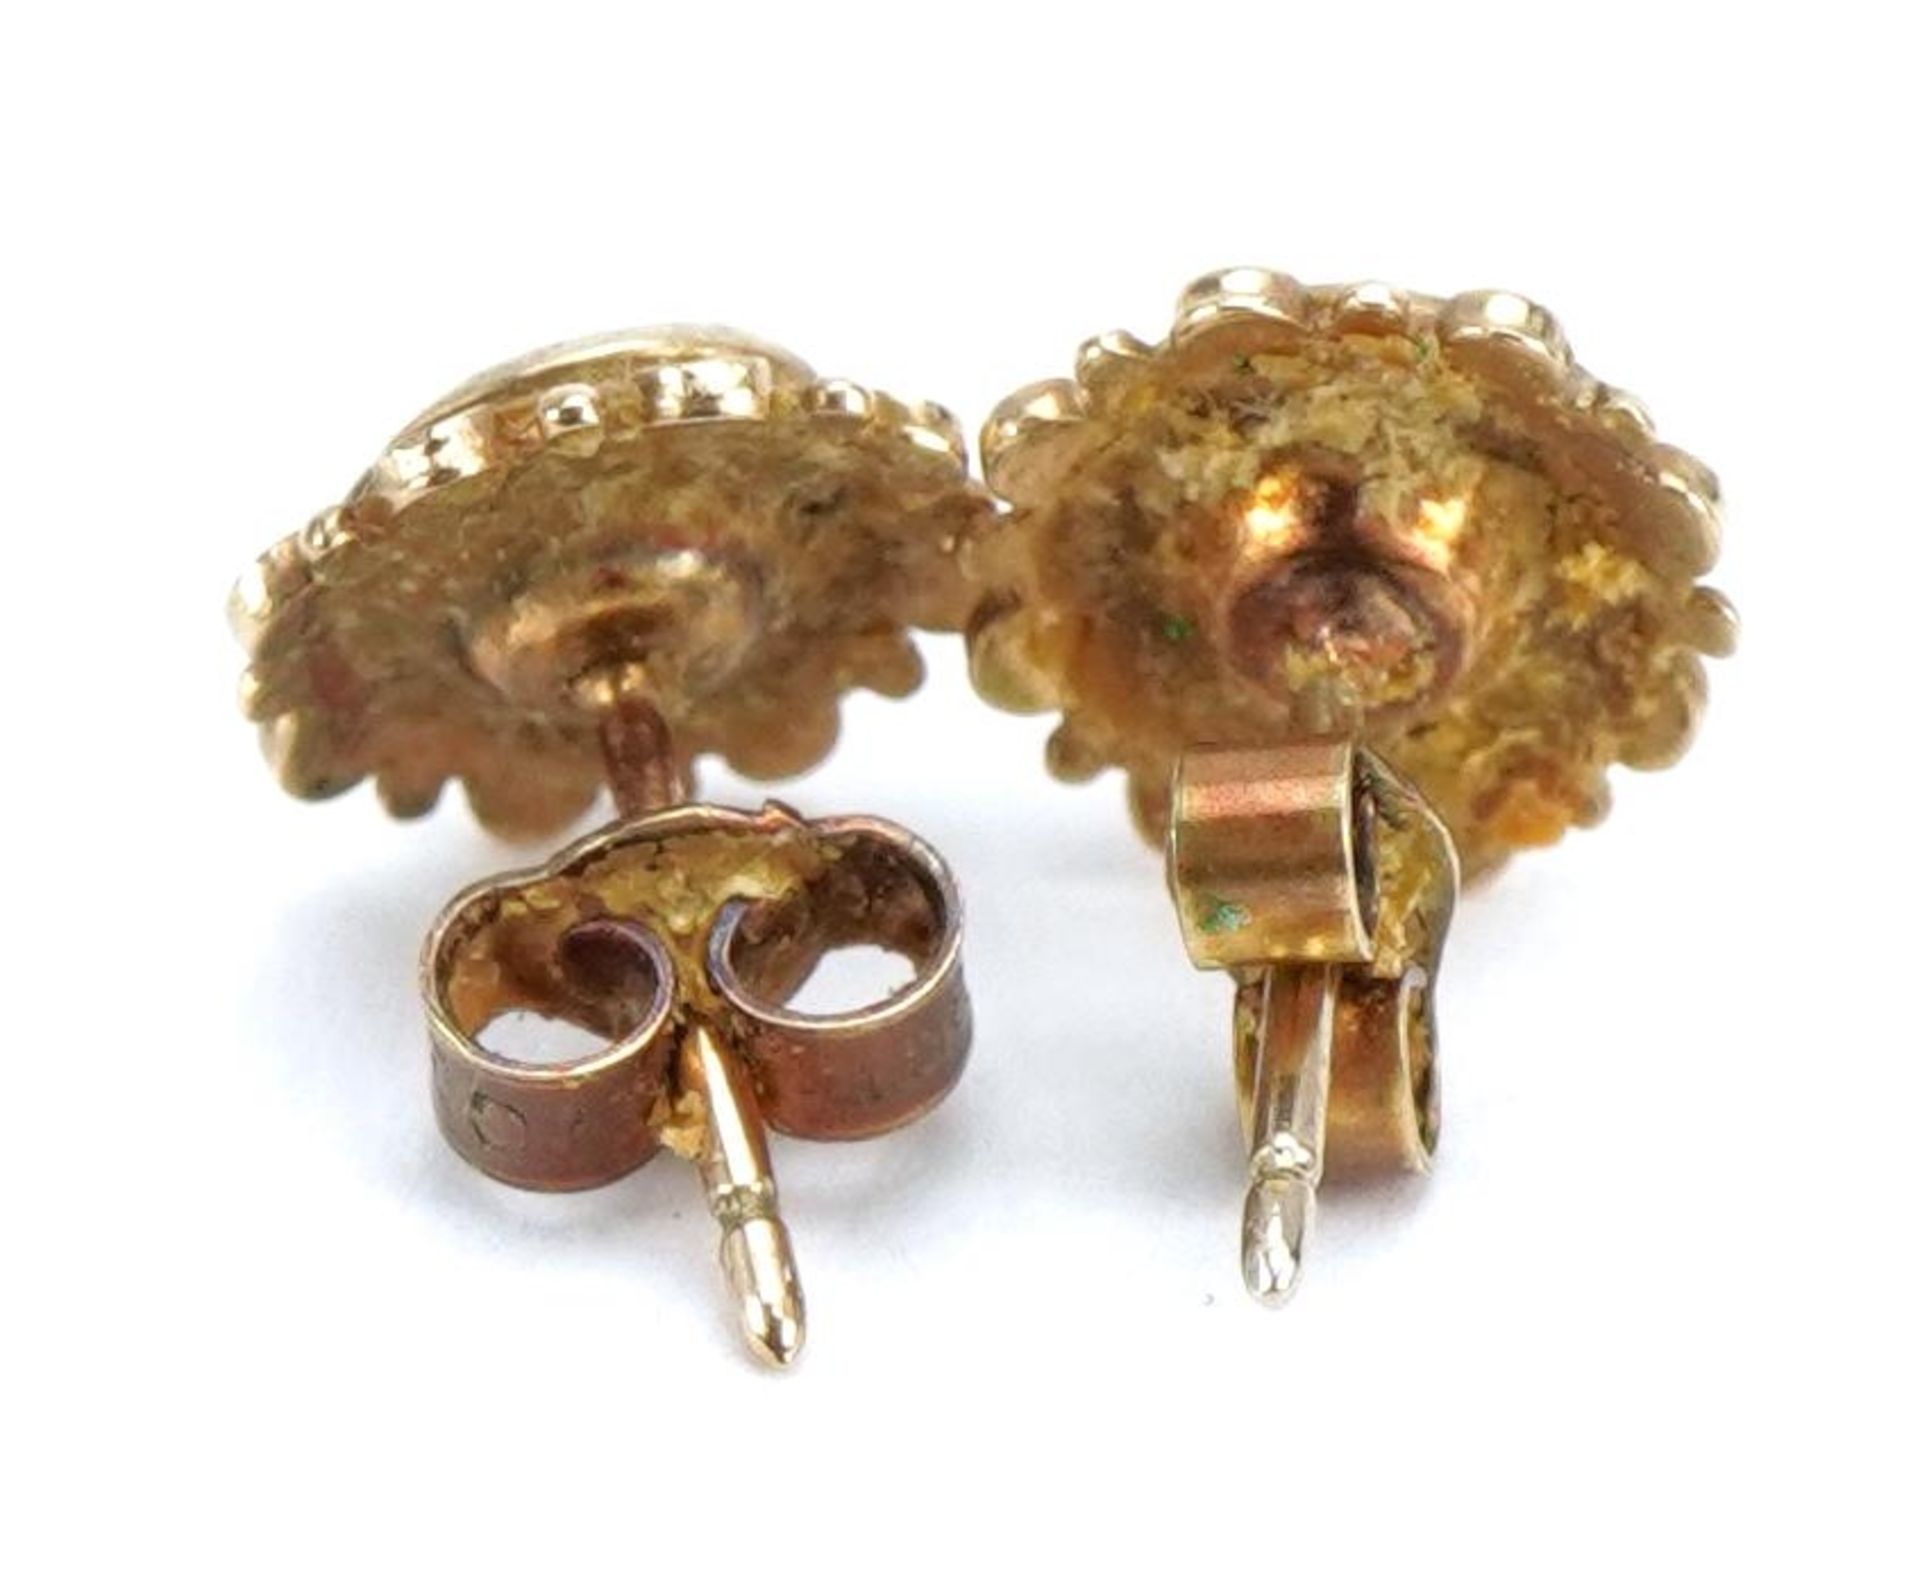 Pair of unmarked gold garnet stud earrings, 1.0cm high, 1.7g - Image 2 of 2